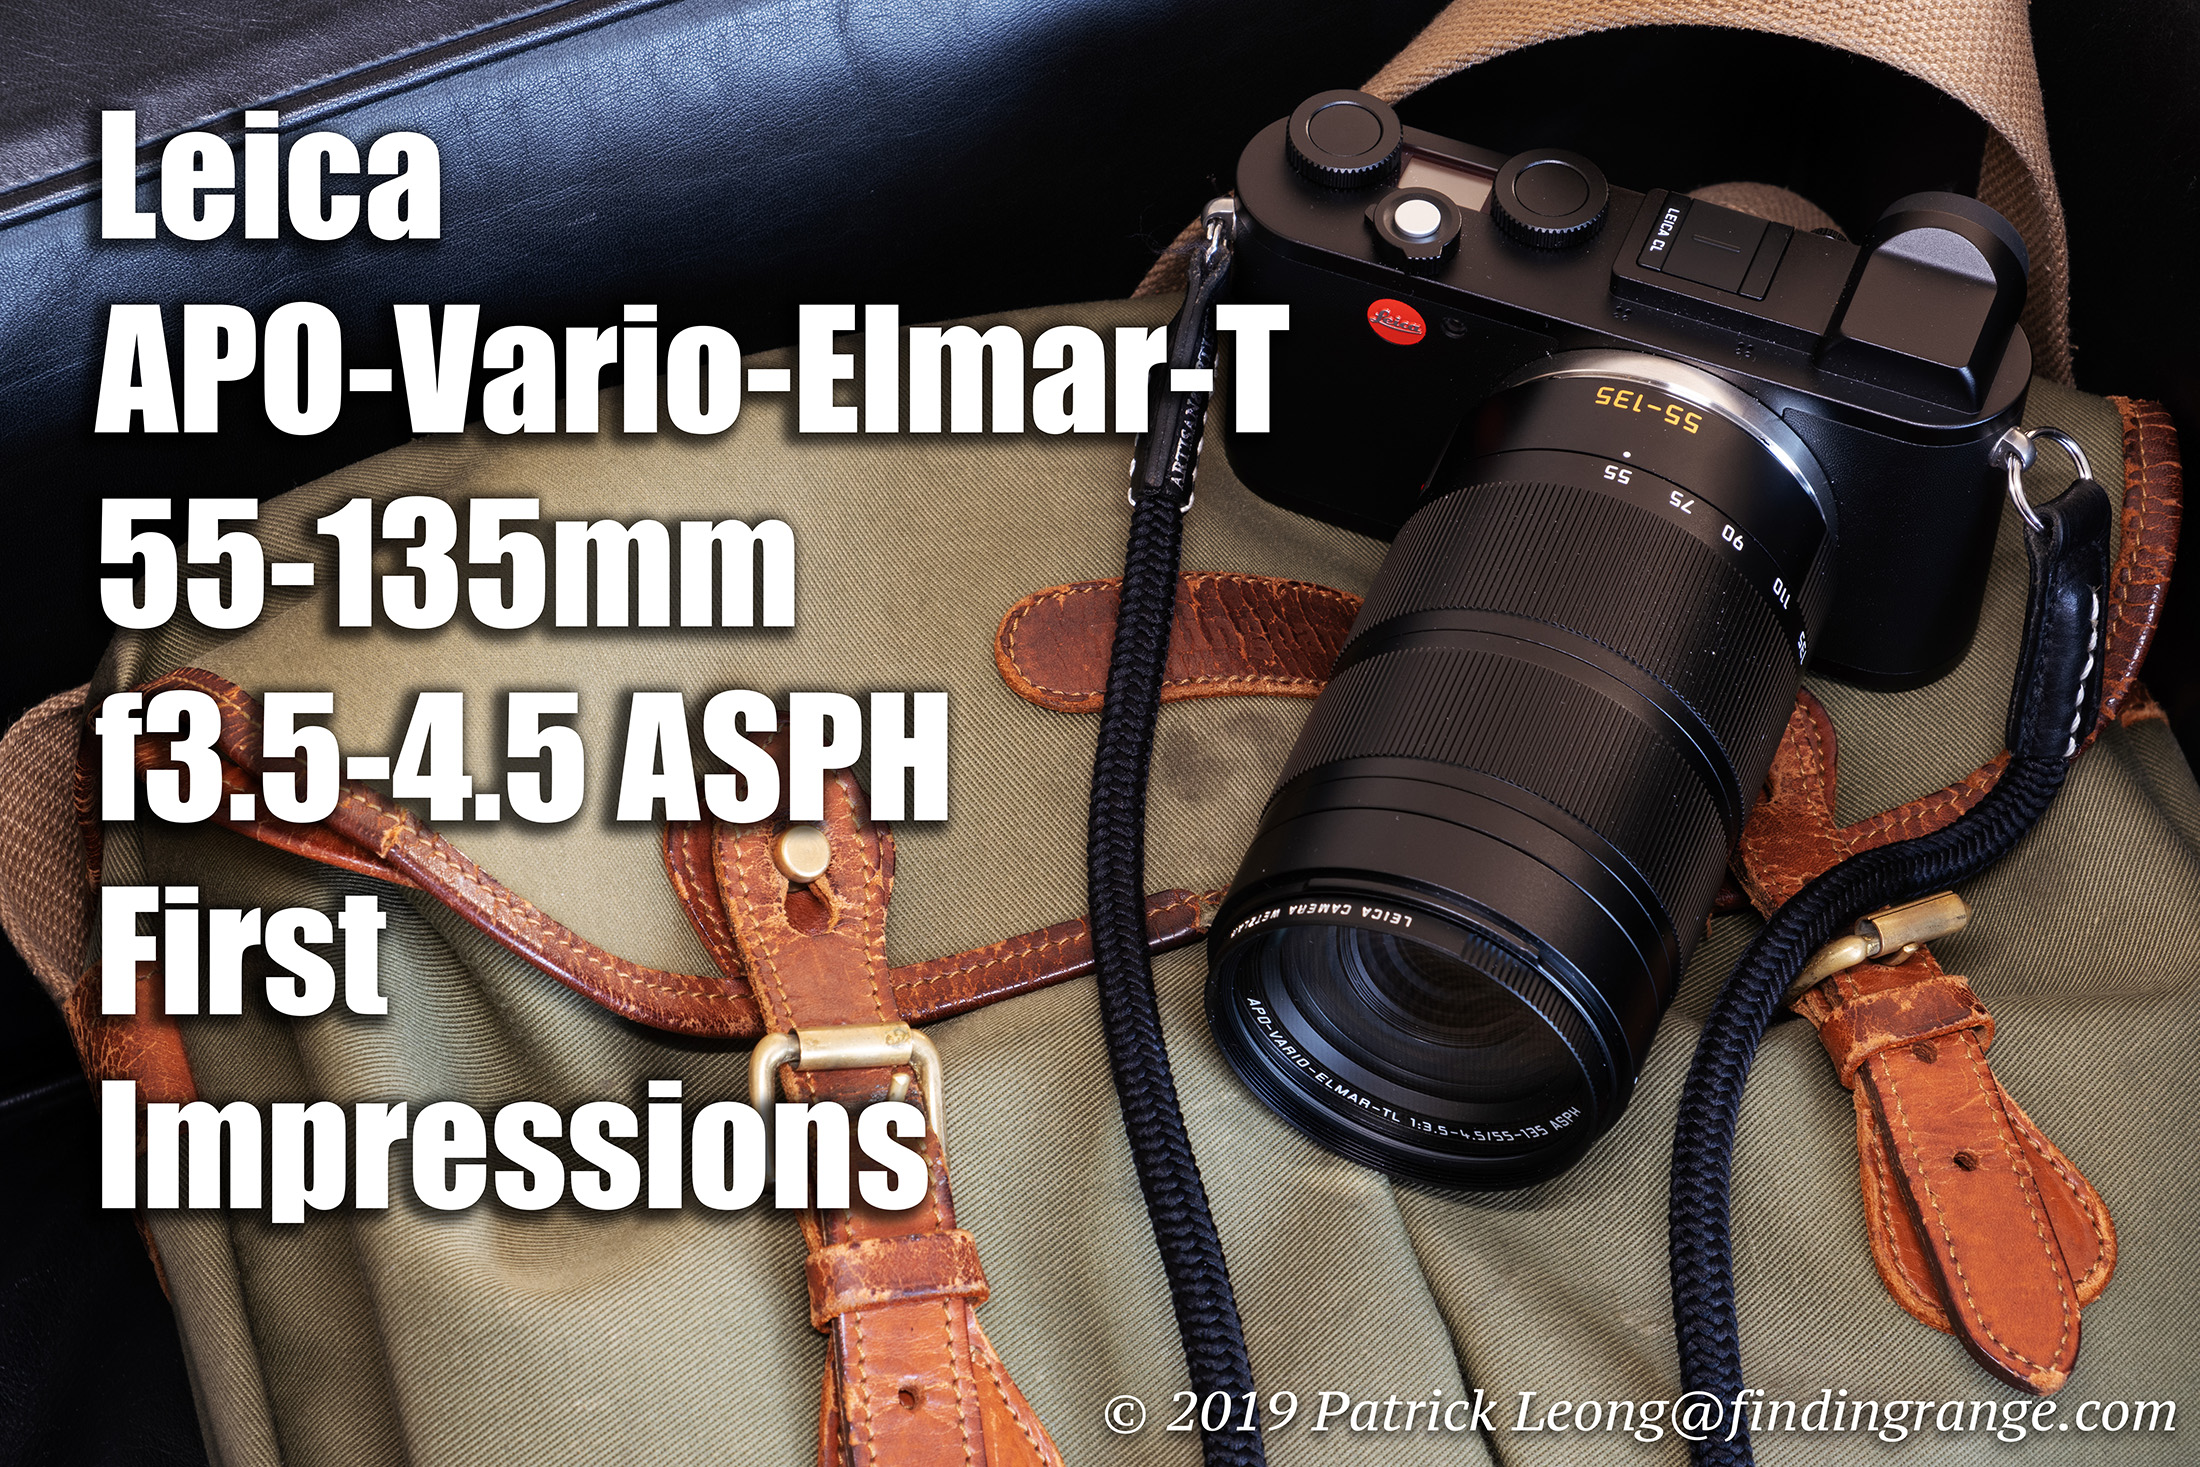 Leica APO-Vario-Elmar-T 55-135mm f3.5-4.5 ASPH First Impressions